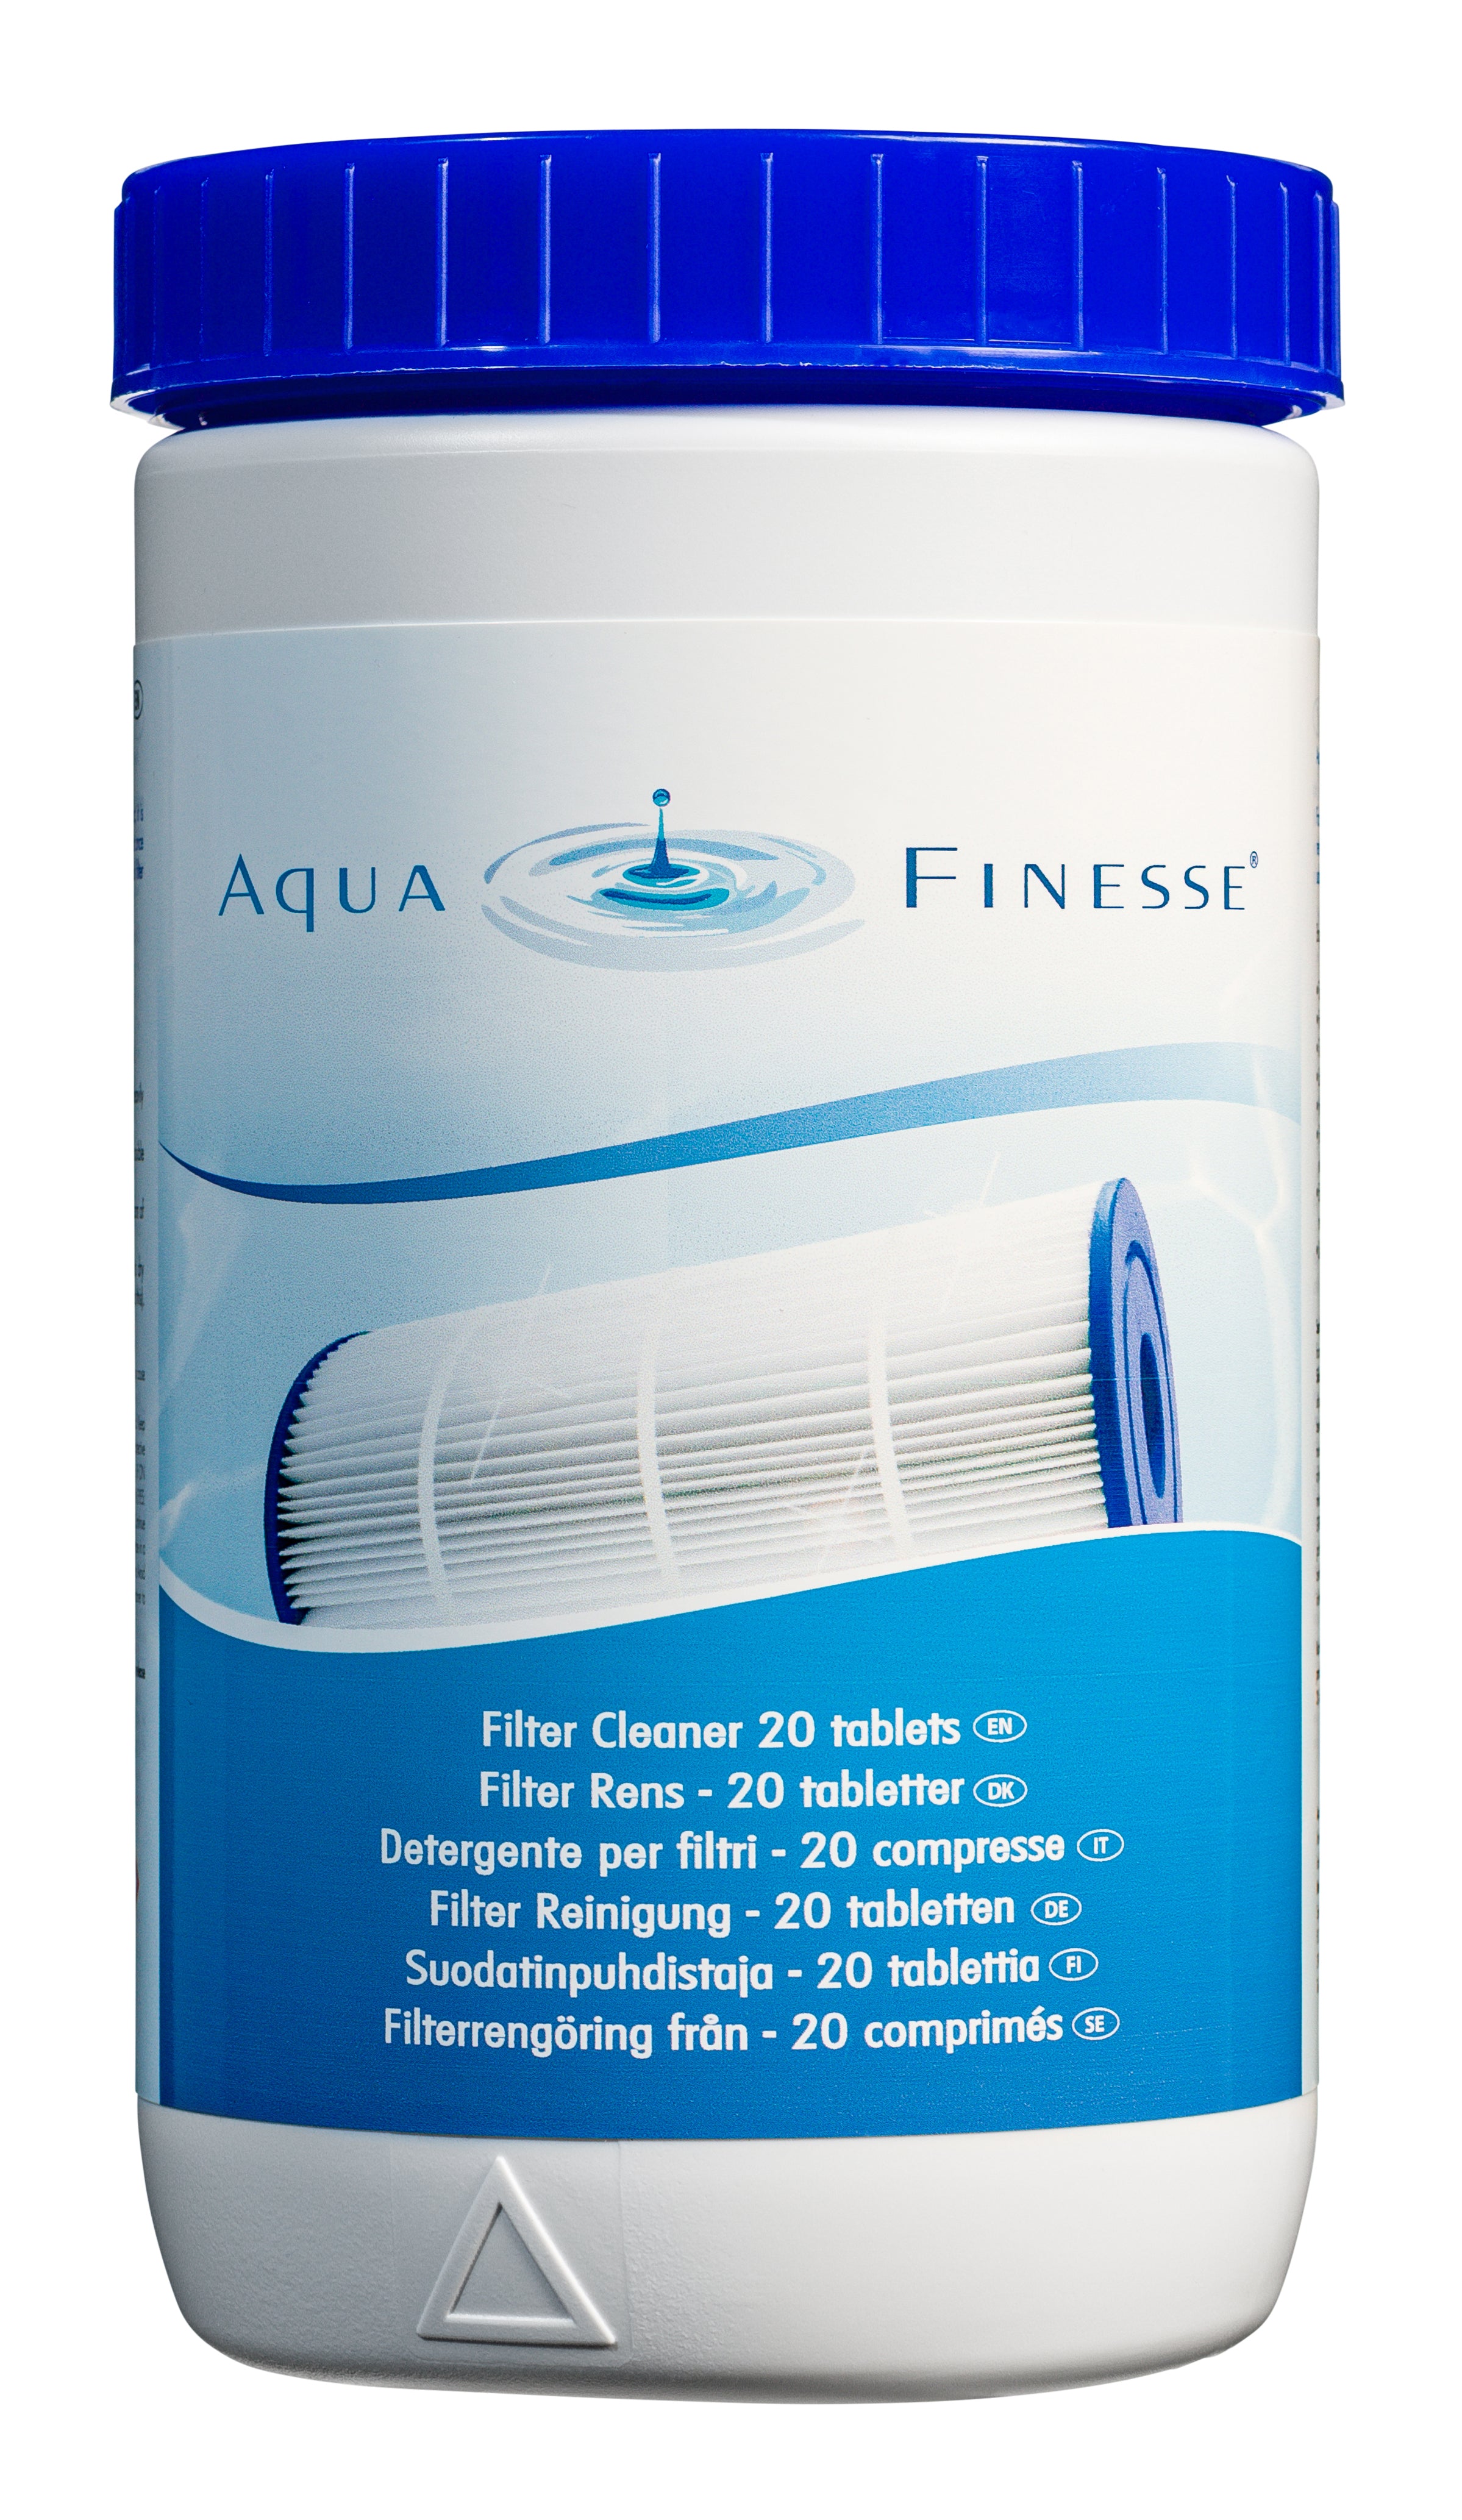 AquaFinesse Filtercleaner